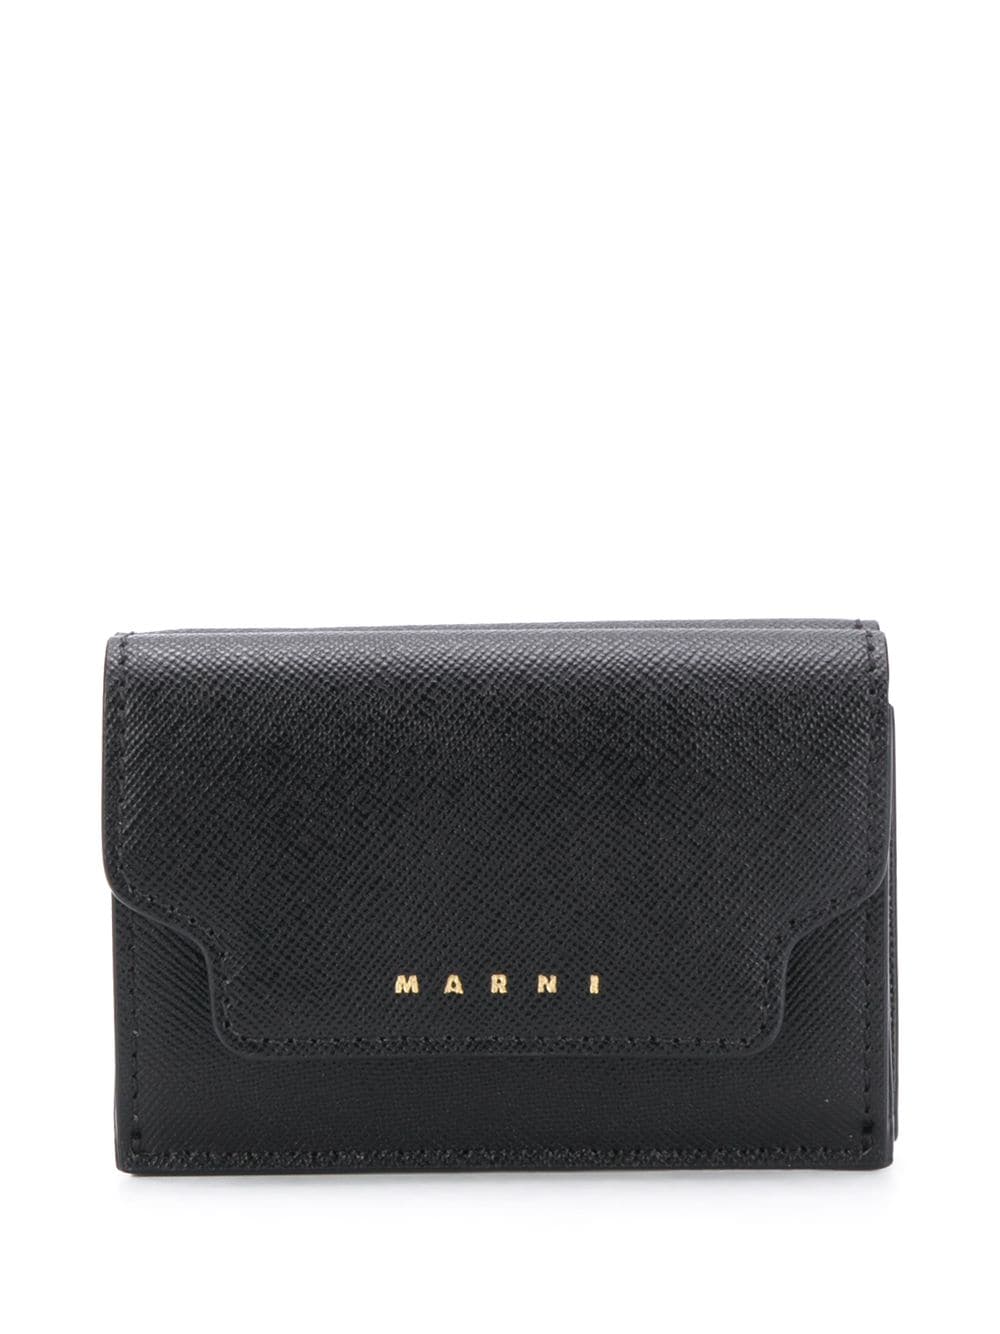 Marni logo lettering wallet - Black von Marni